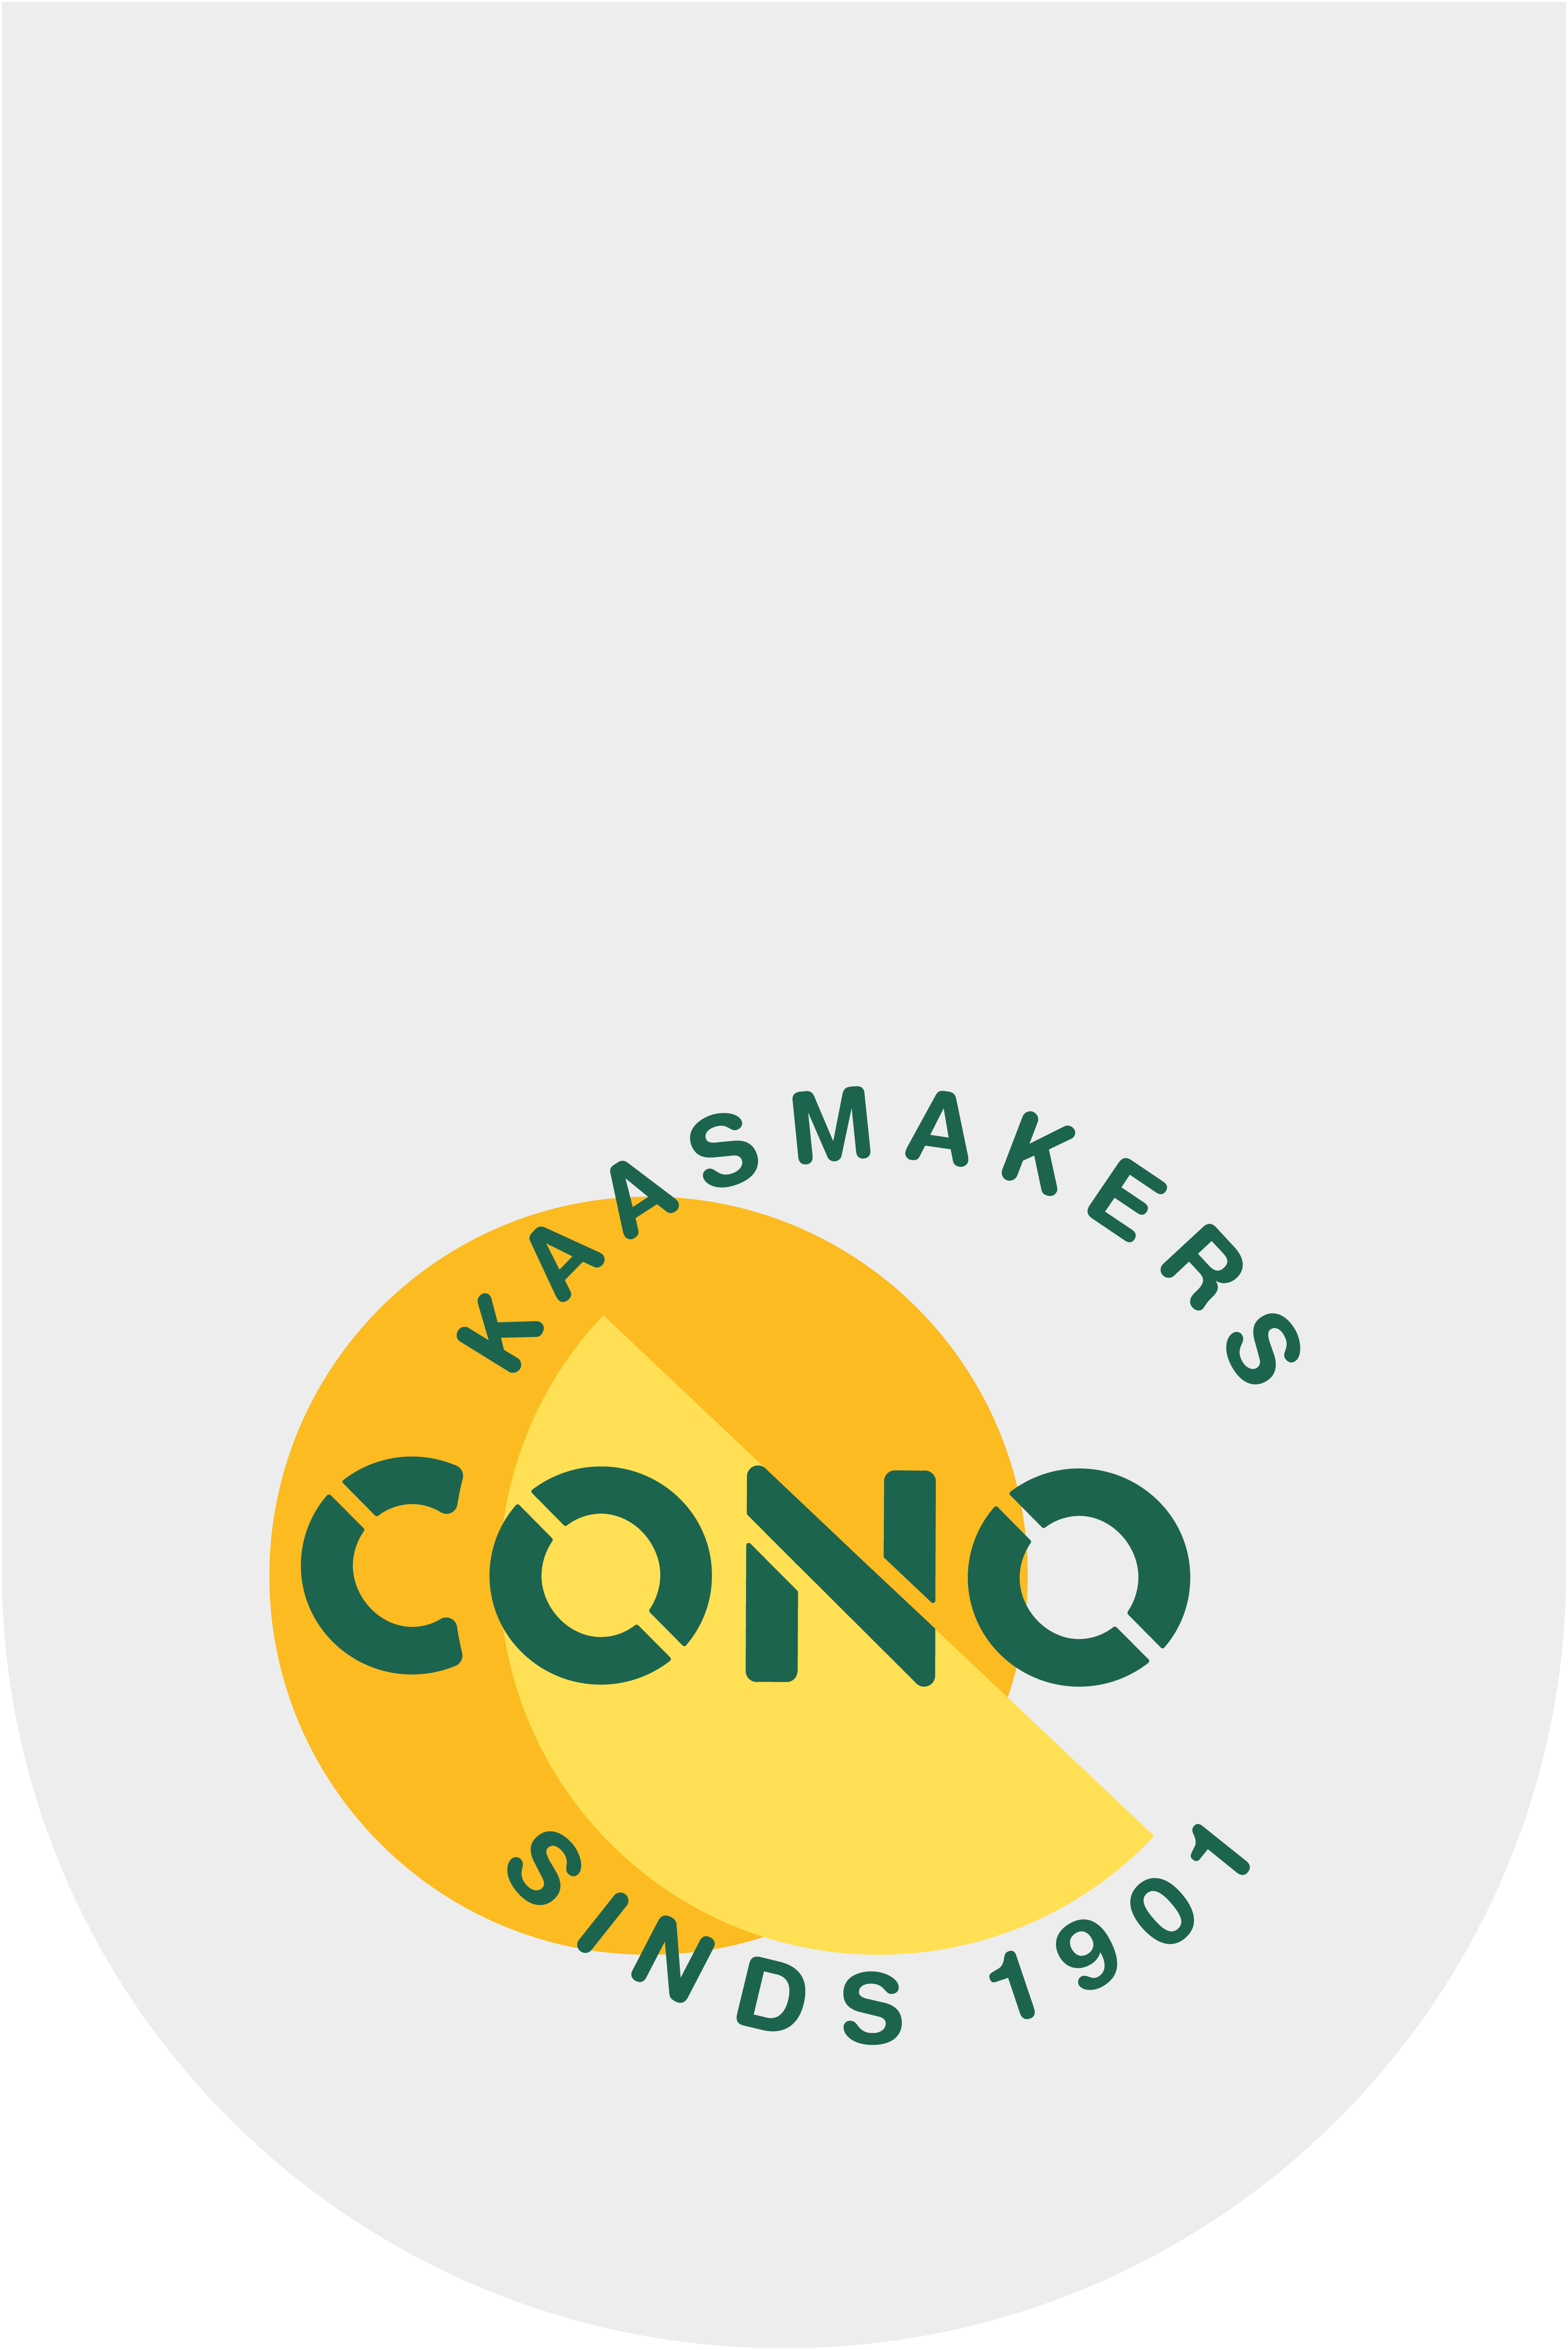 CONO Kaasmakers